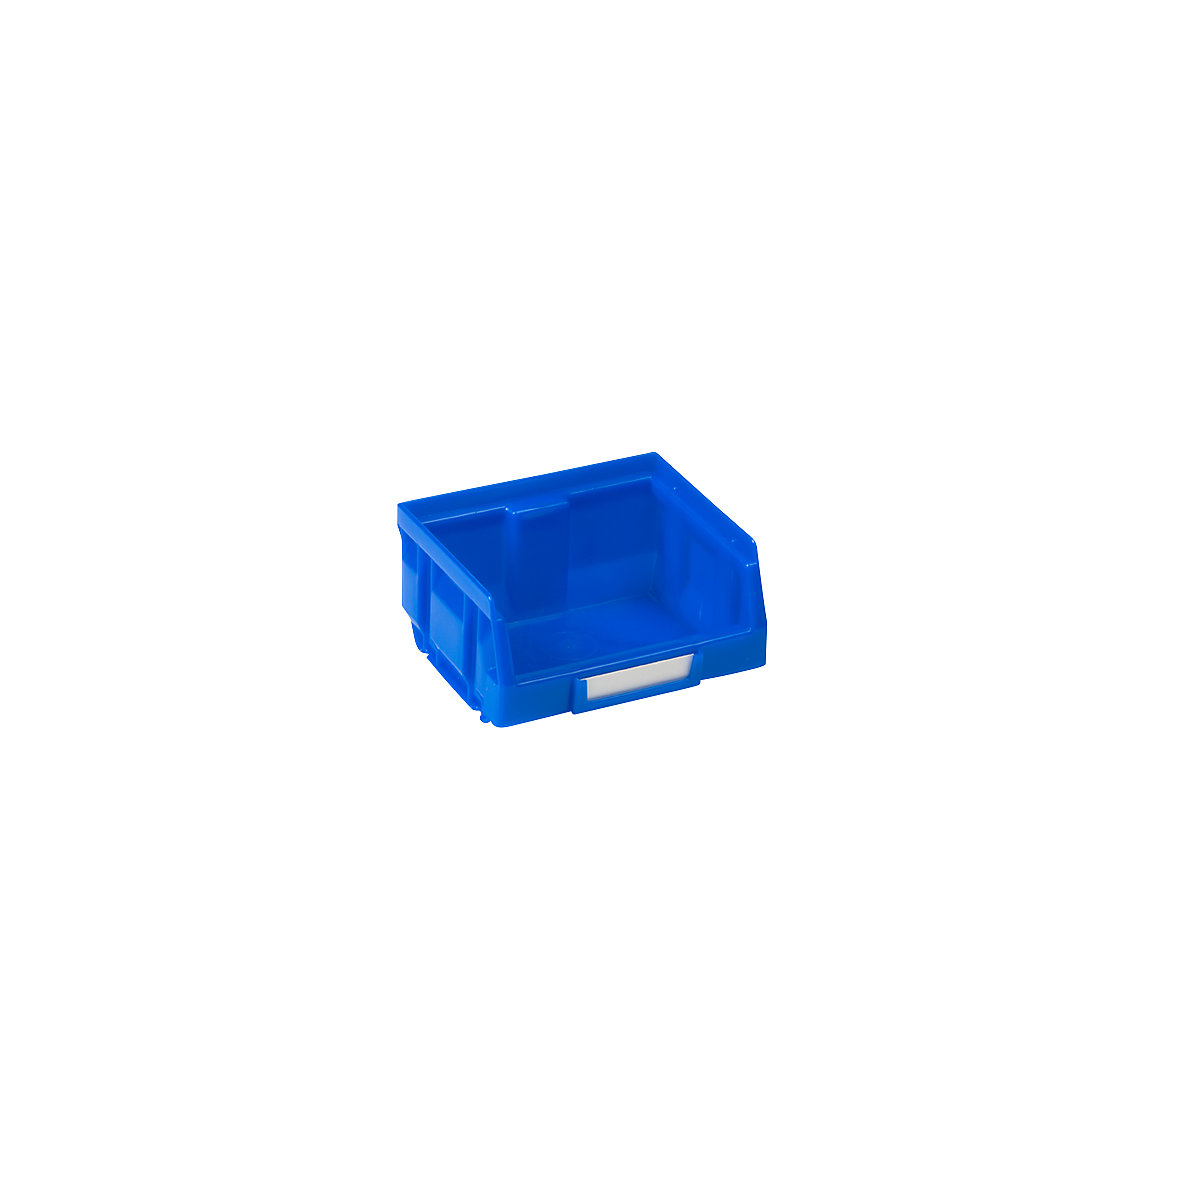 Magazijnbak van polyethyleen, l x b x h = 88 x 105 x 54 mm, blauw, VE = 50 stuks-7